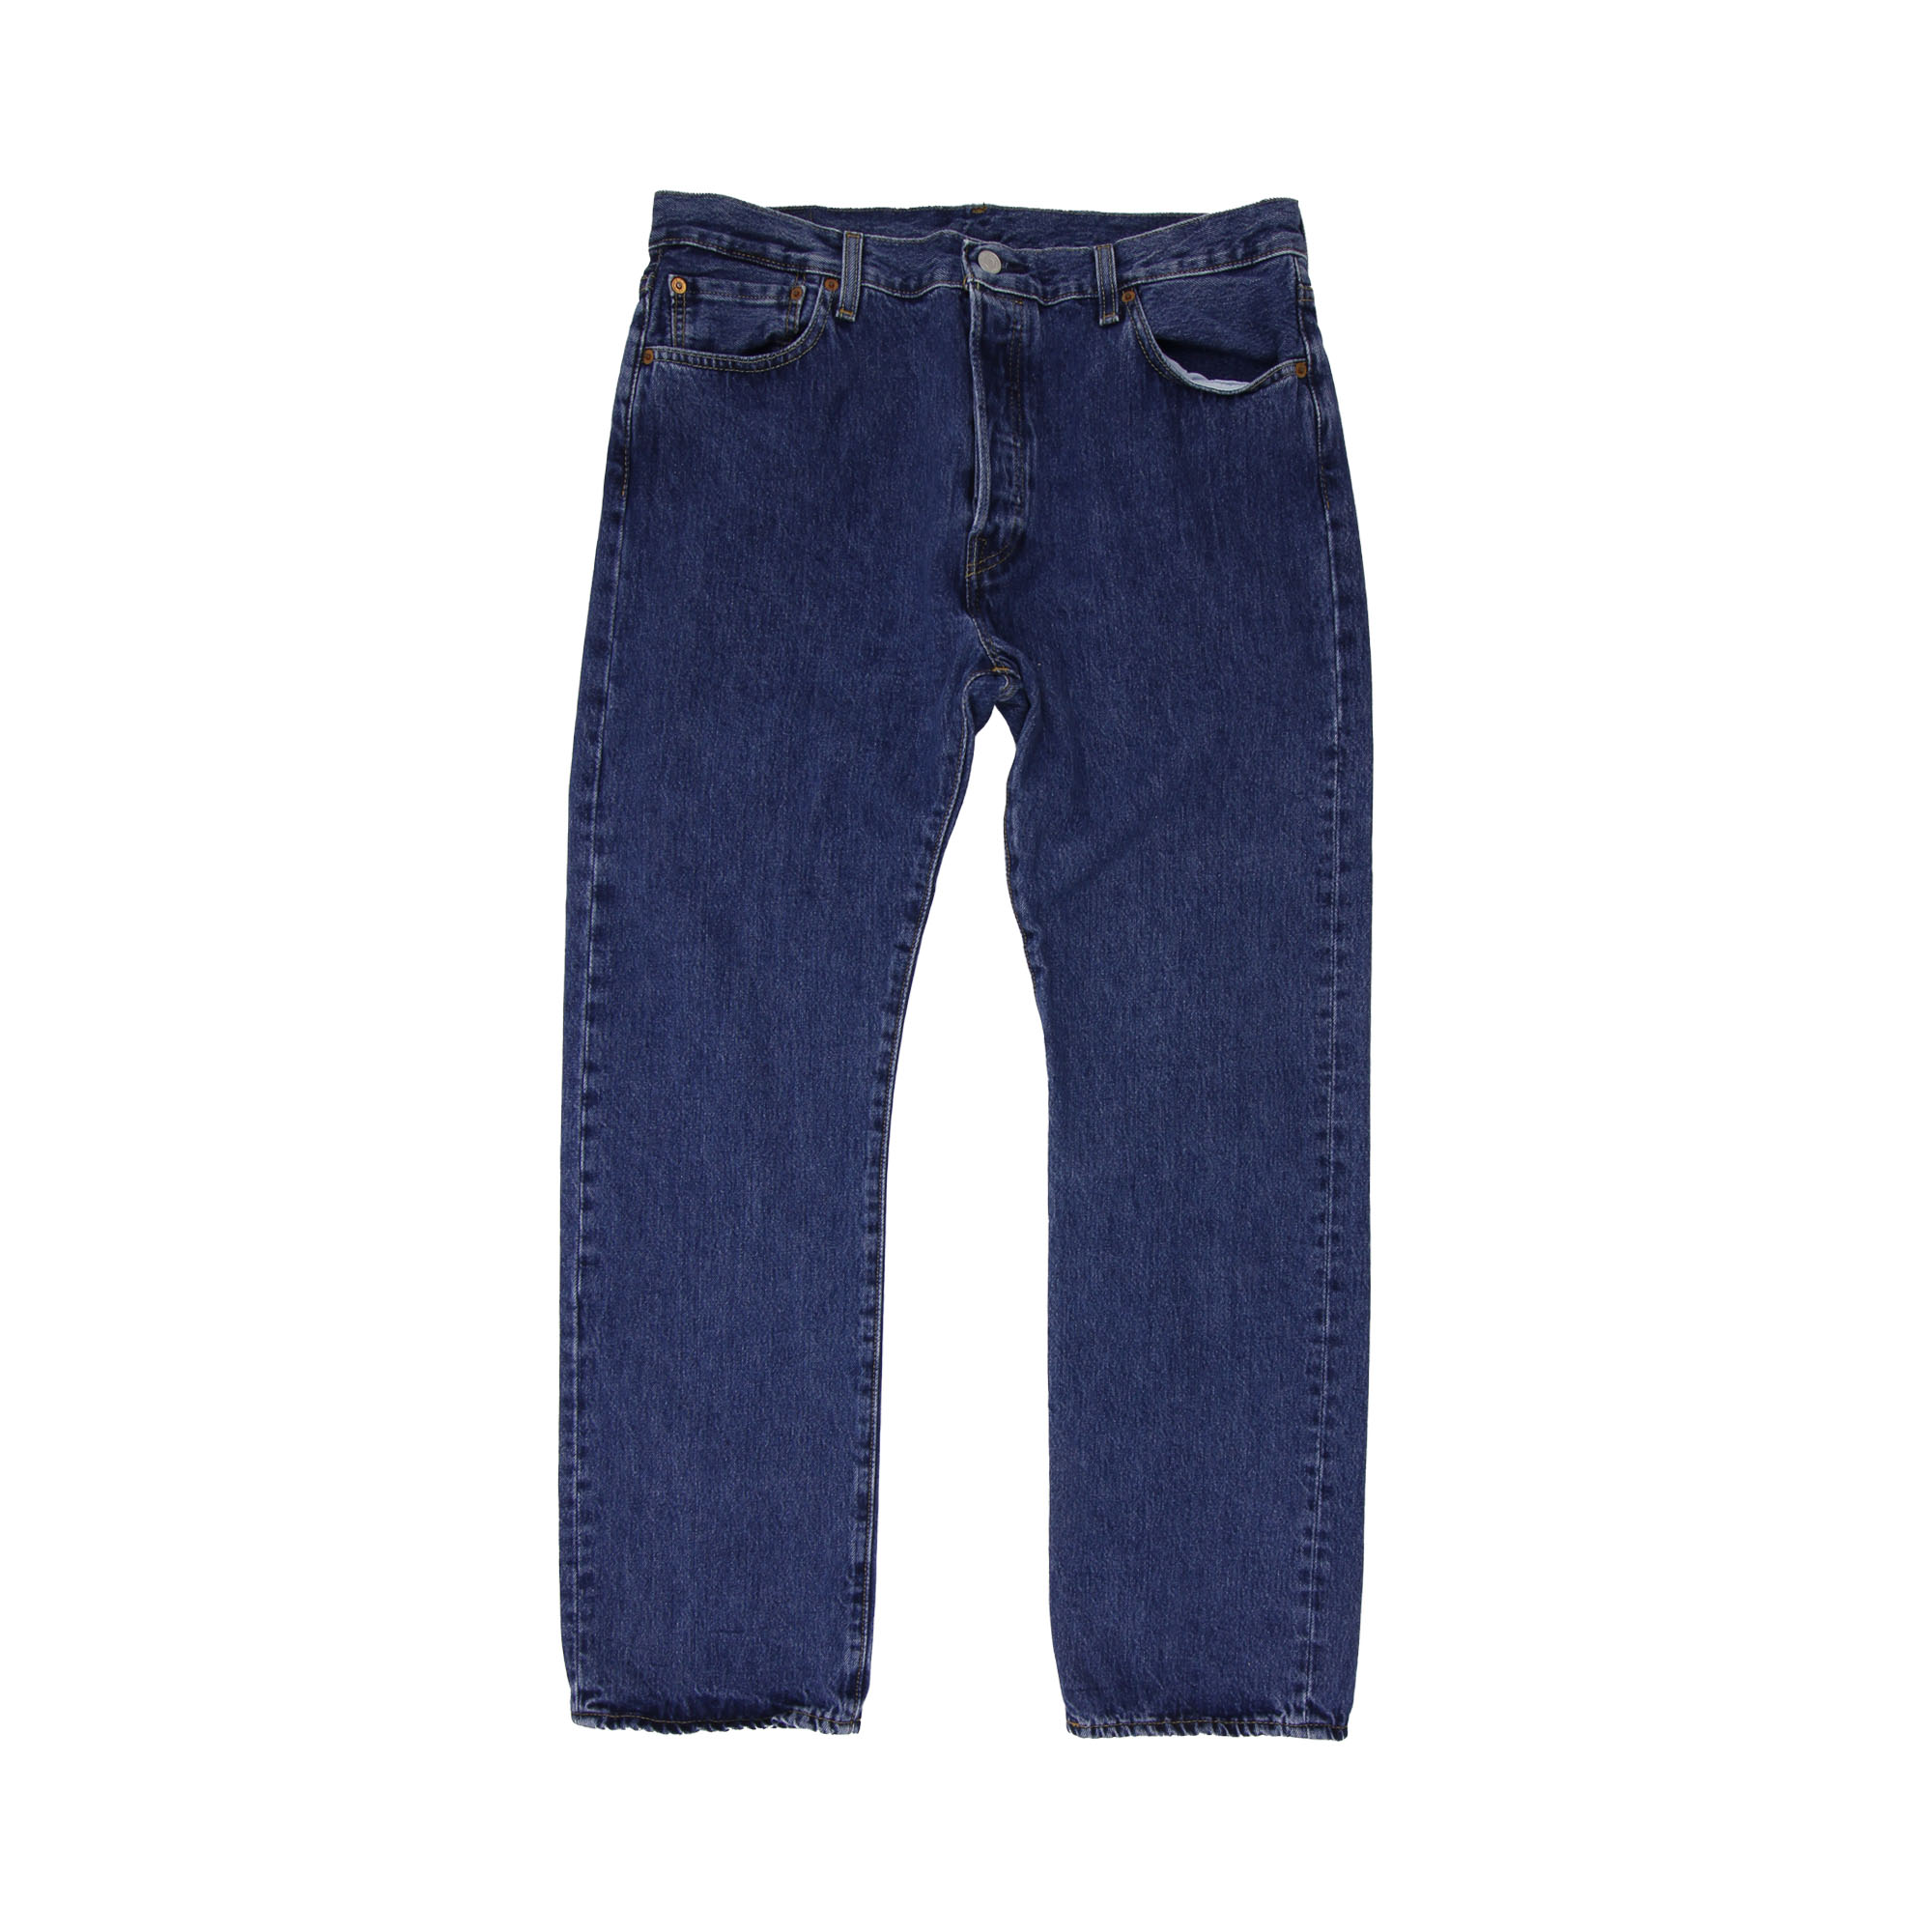 Levi's 501 Jeans -  W36 L32